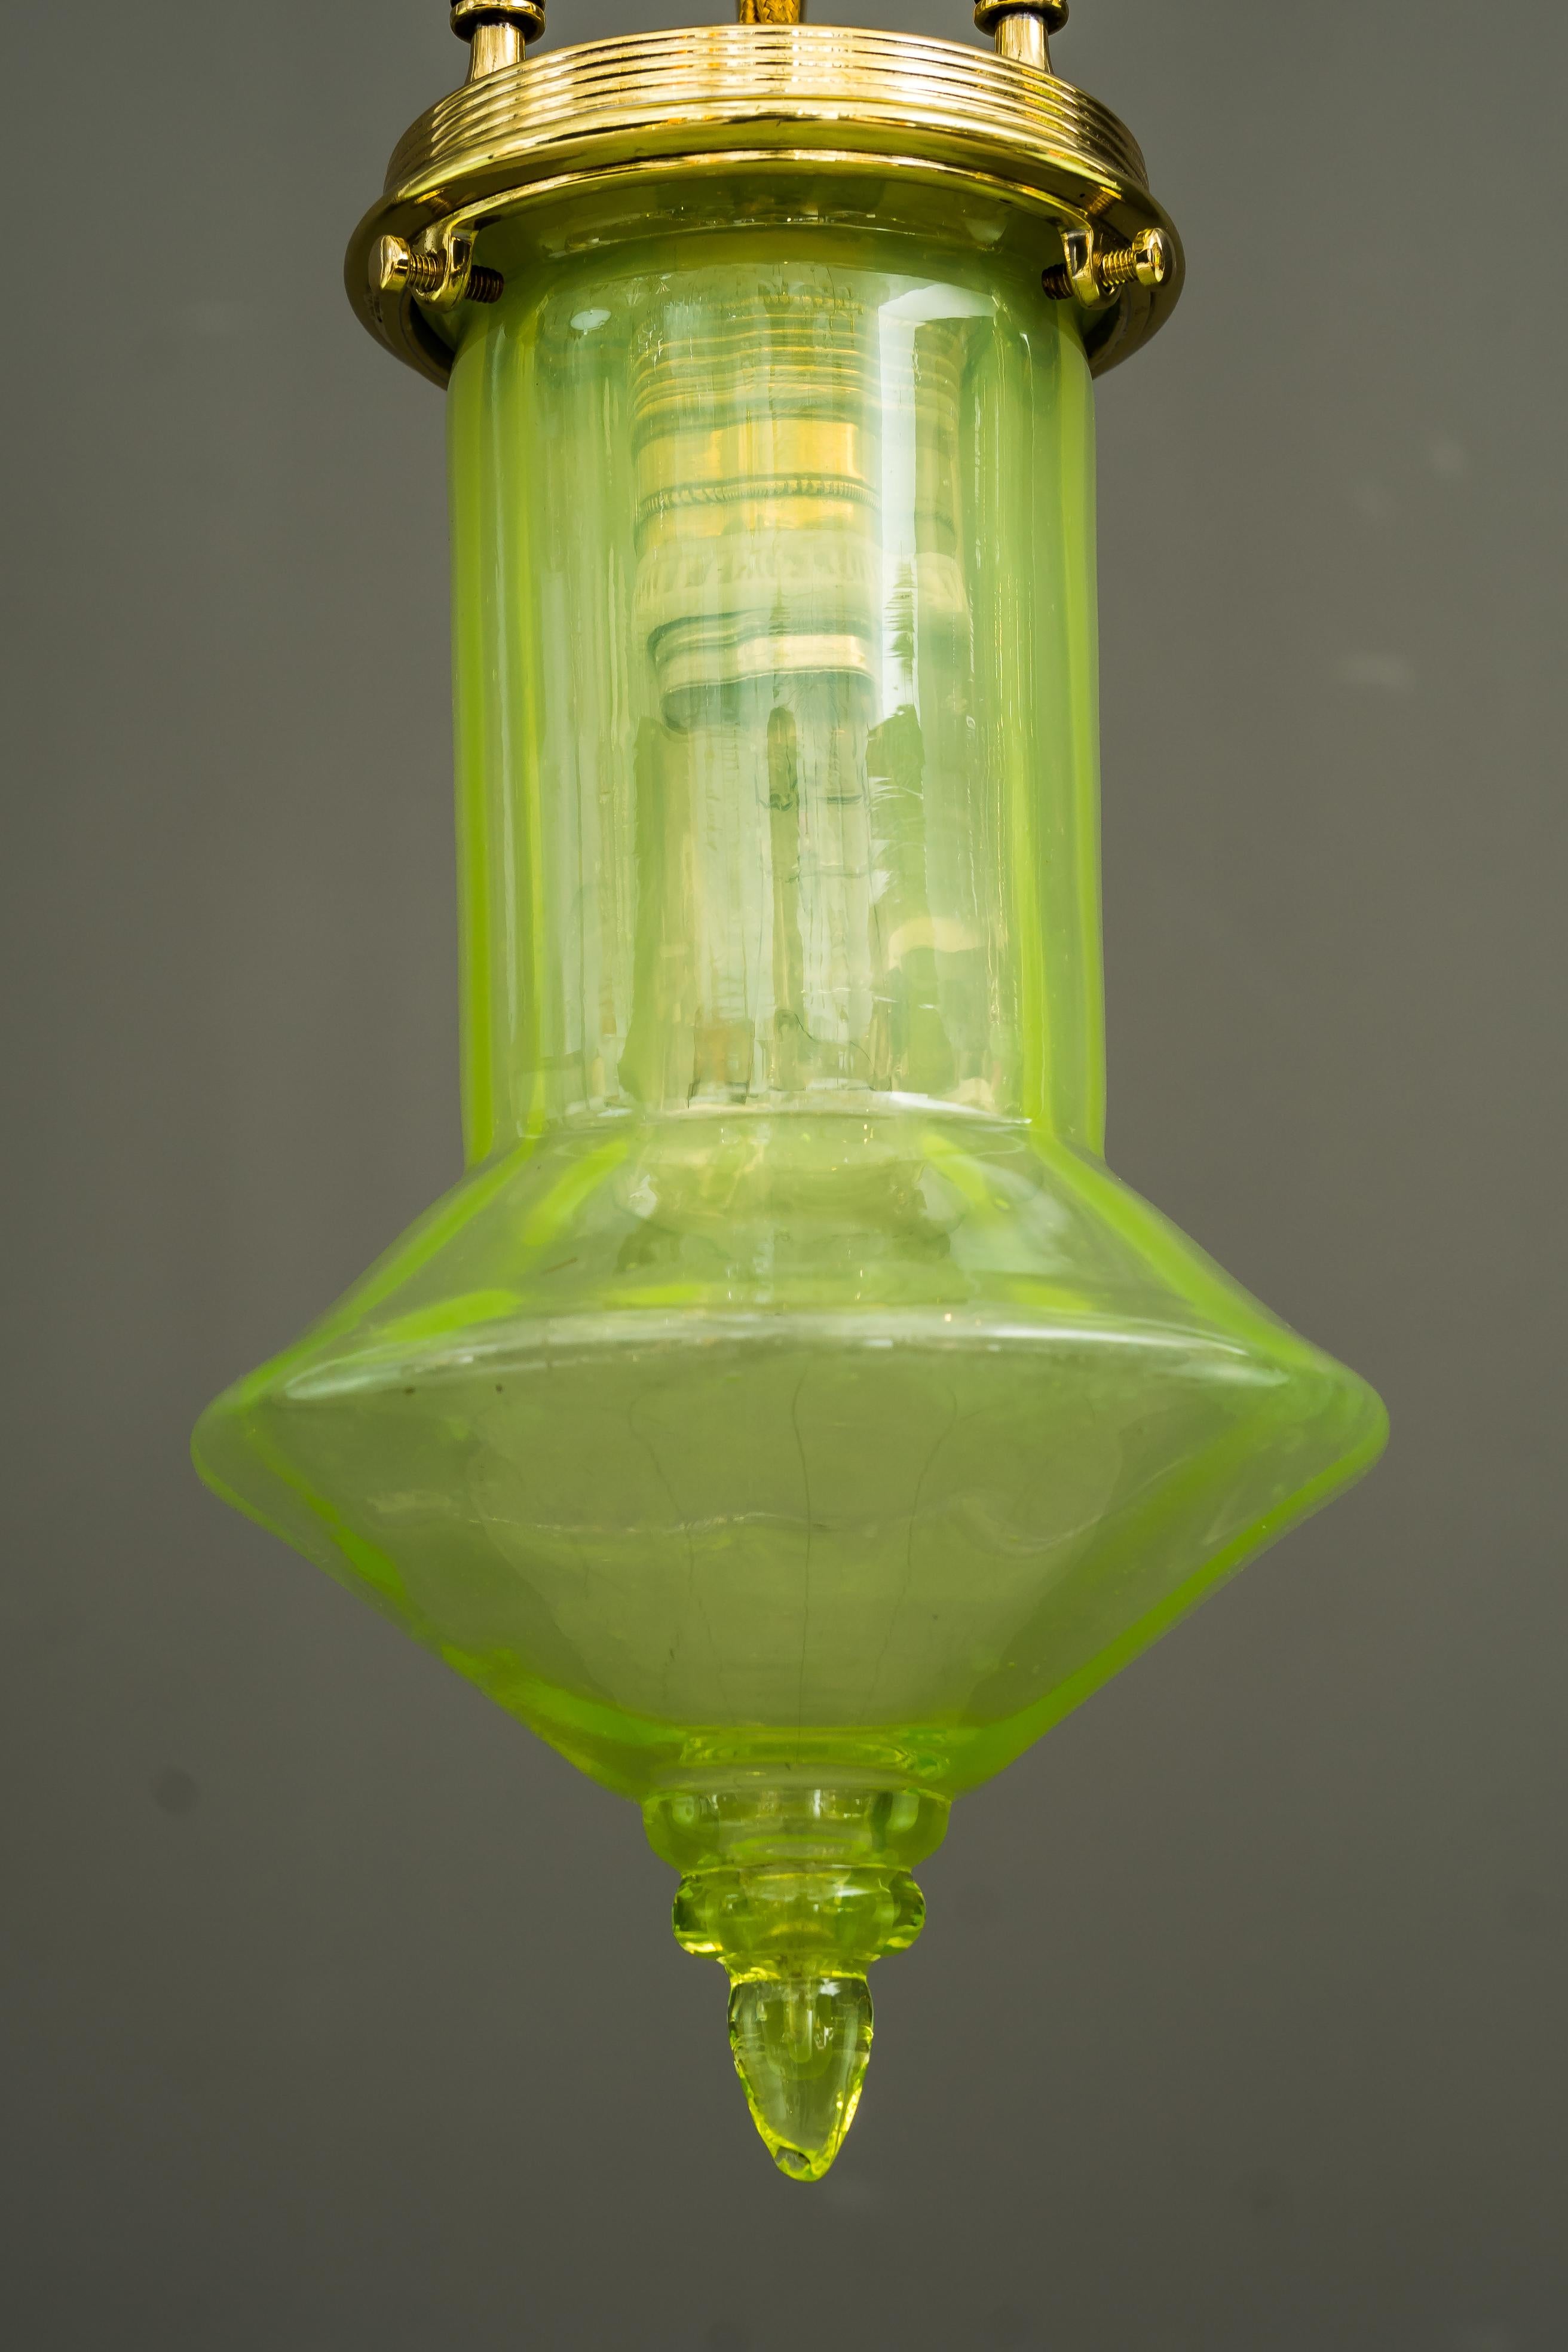 Austrian Art Deco Ceiling Lamp Around 1920s with Original Opaline Glass Shade